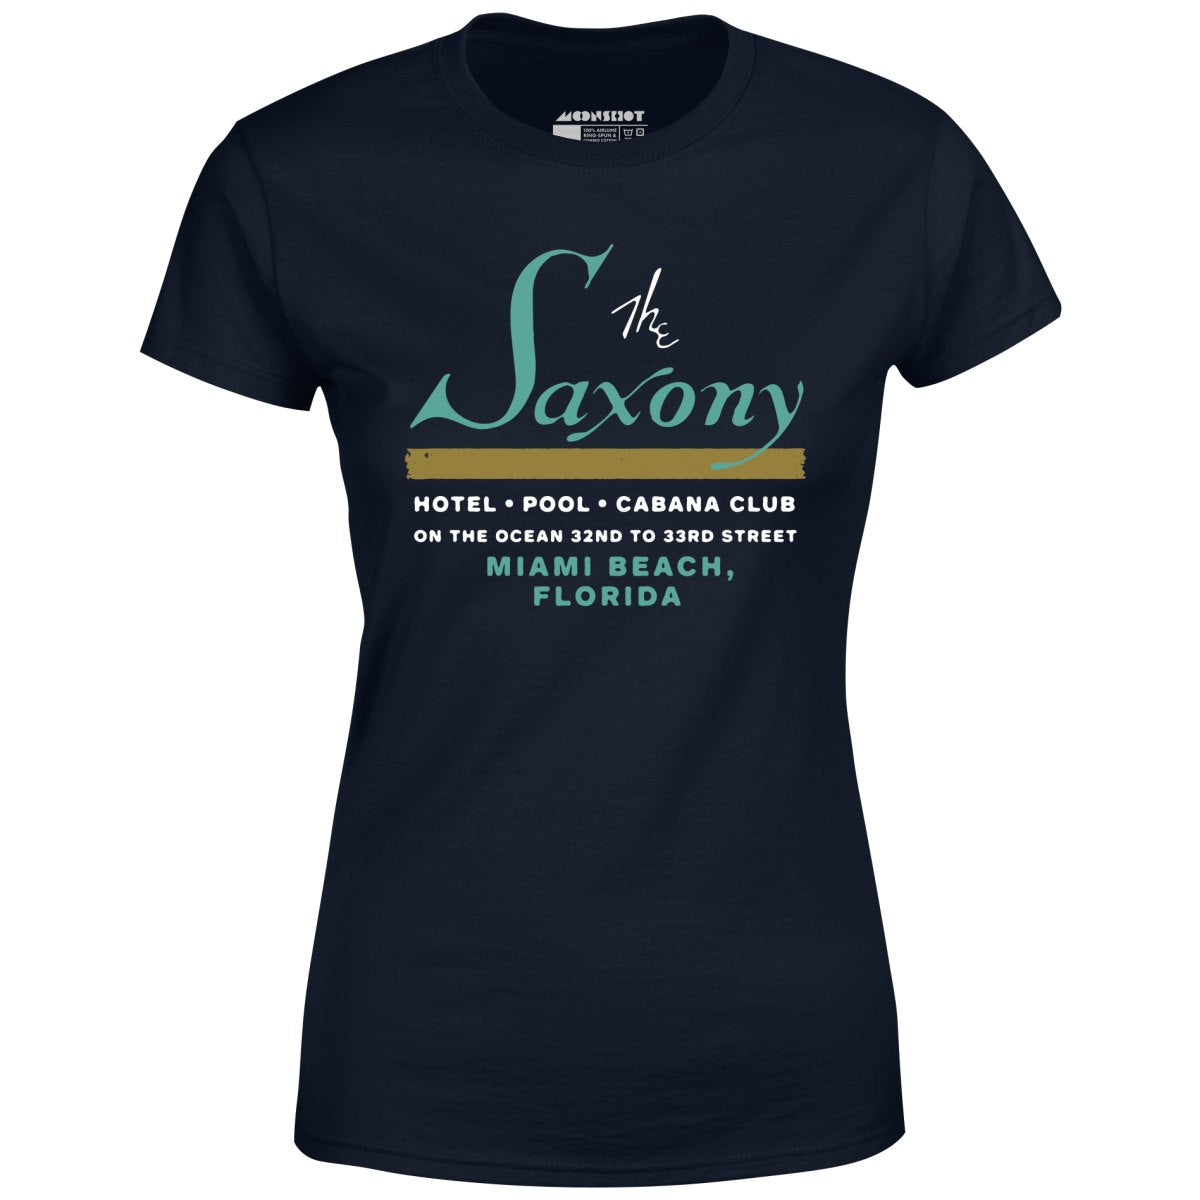 The Saxony - Miami Beach, FL - Vintage Hotel - Women's T-Shirt